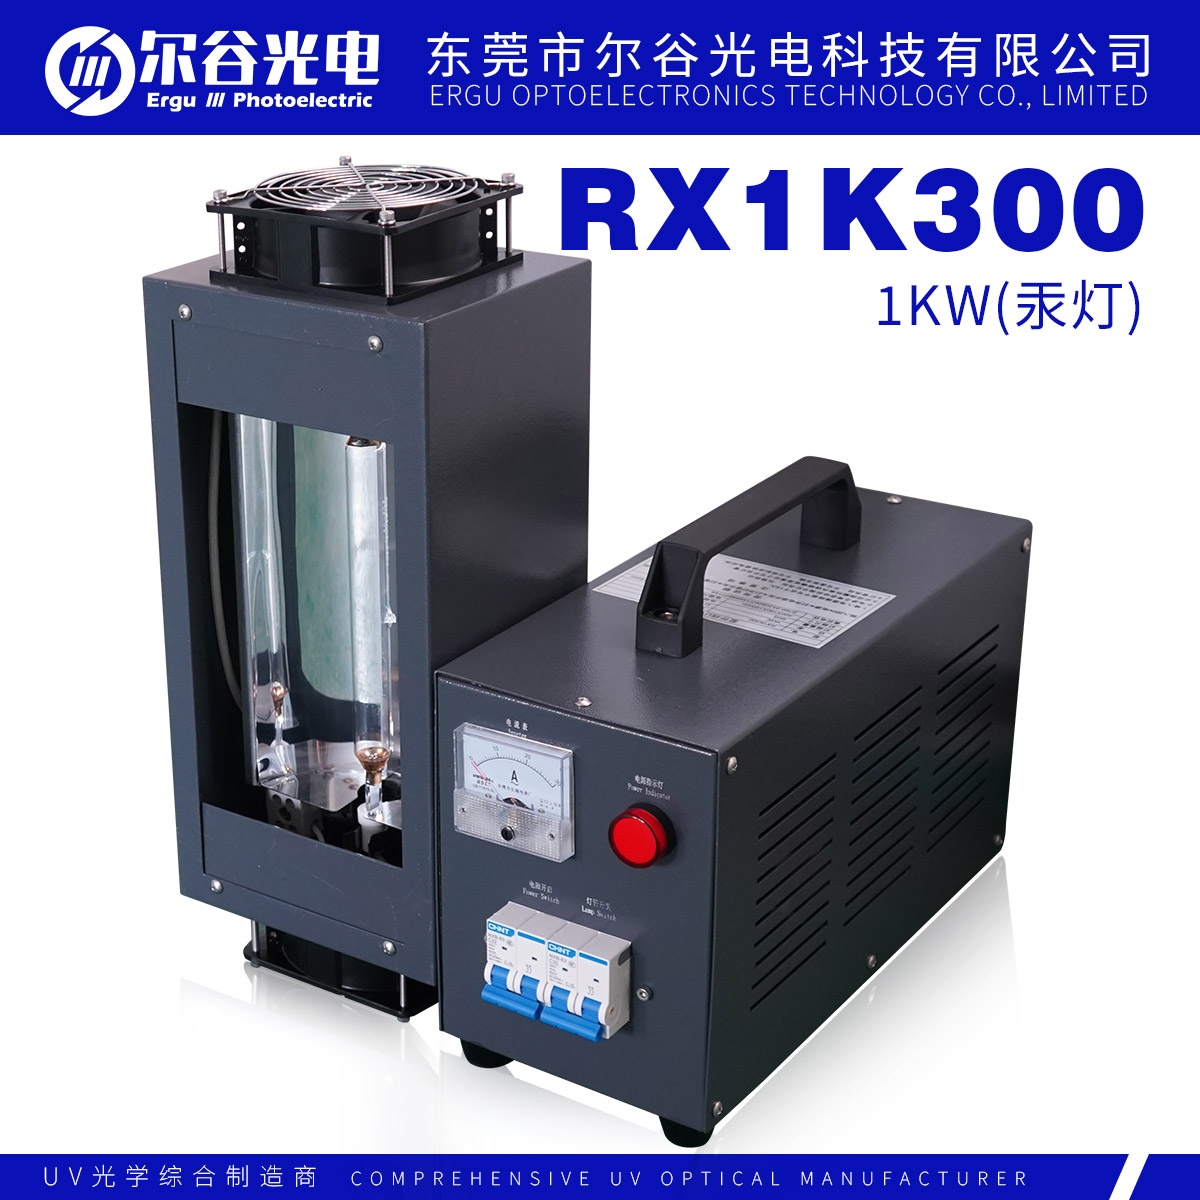 RX1KW300 手持式UV光